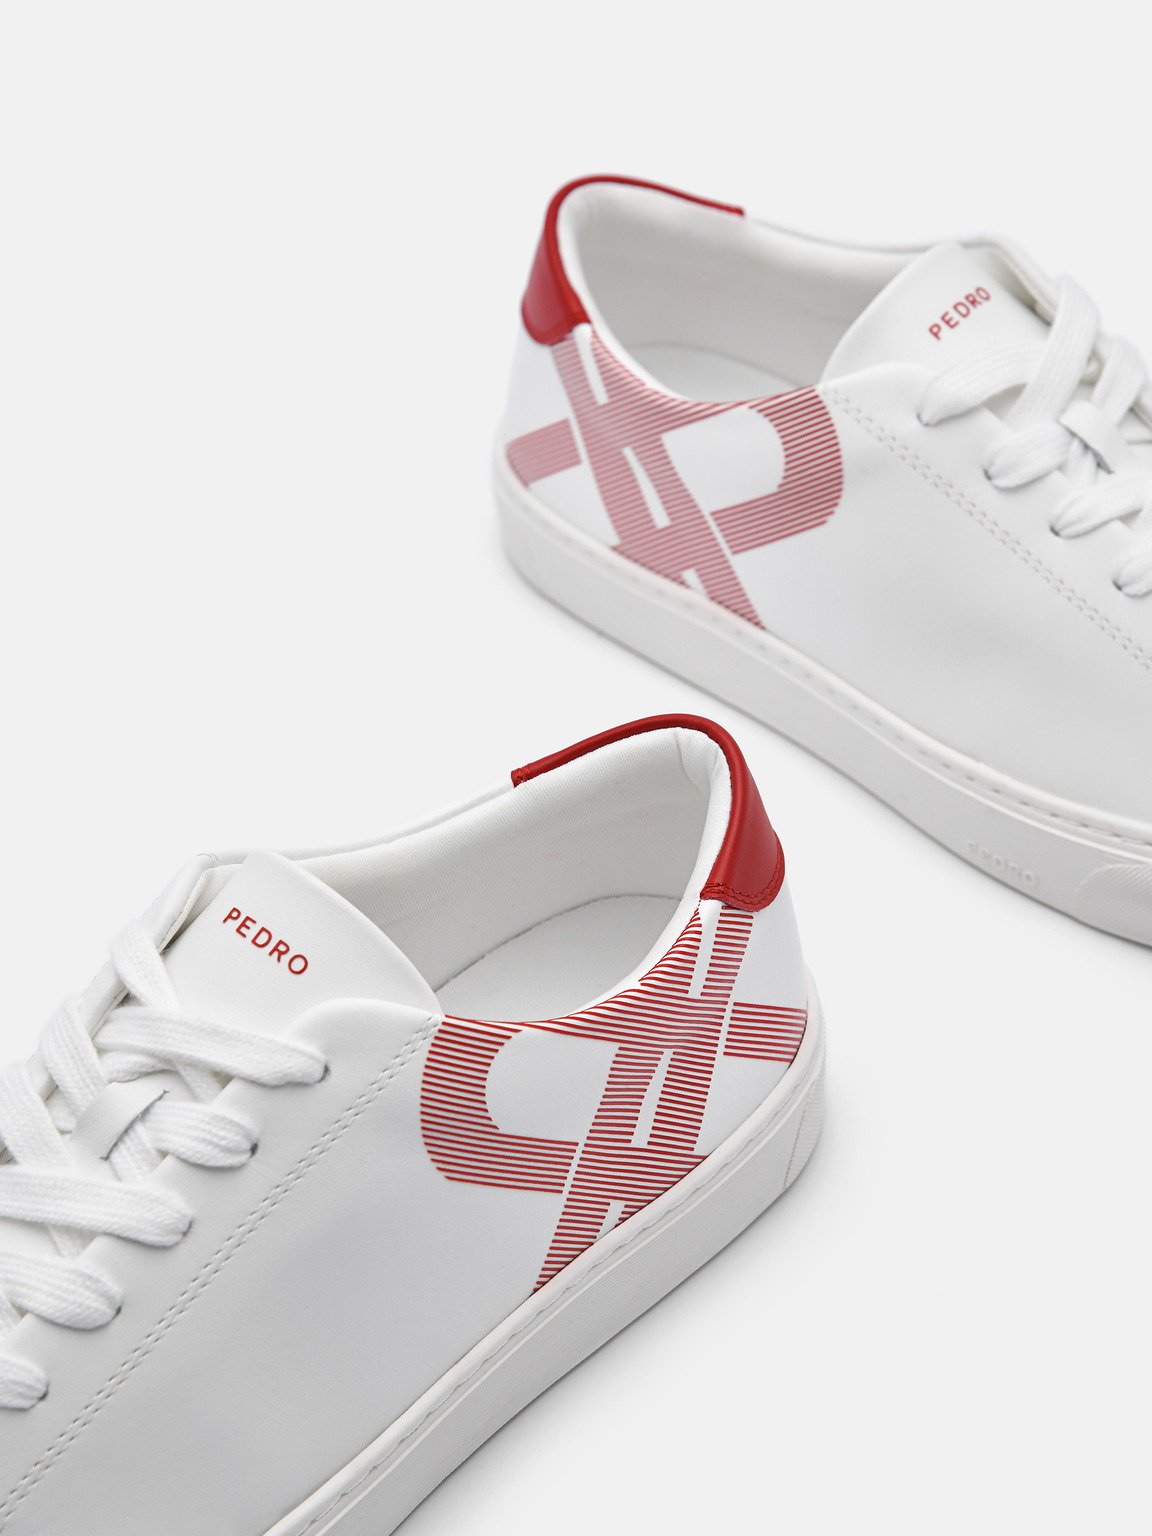 PEDRO Icon Ridge皮質運動鞋, 白色